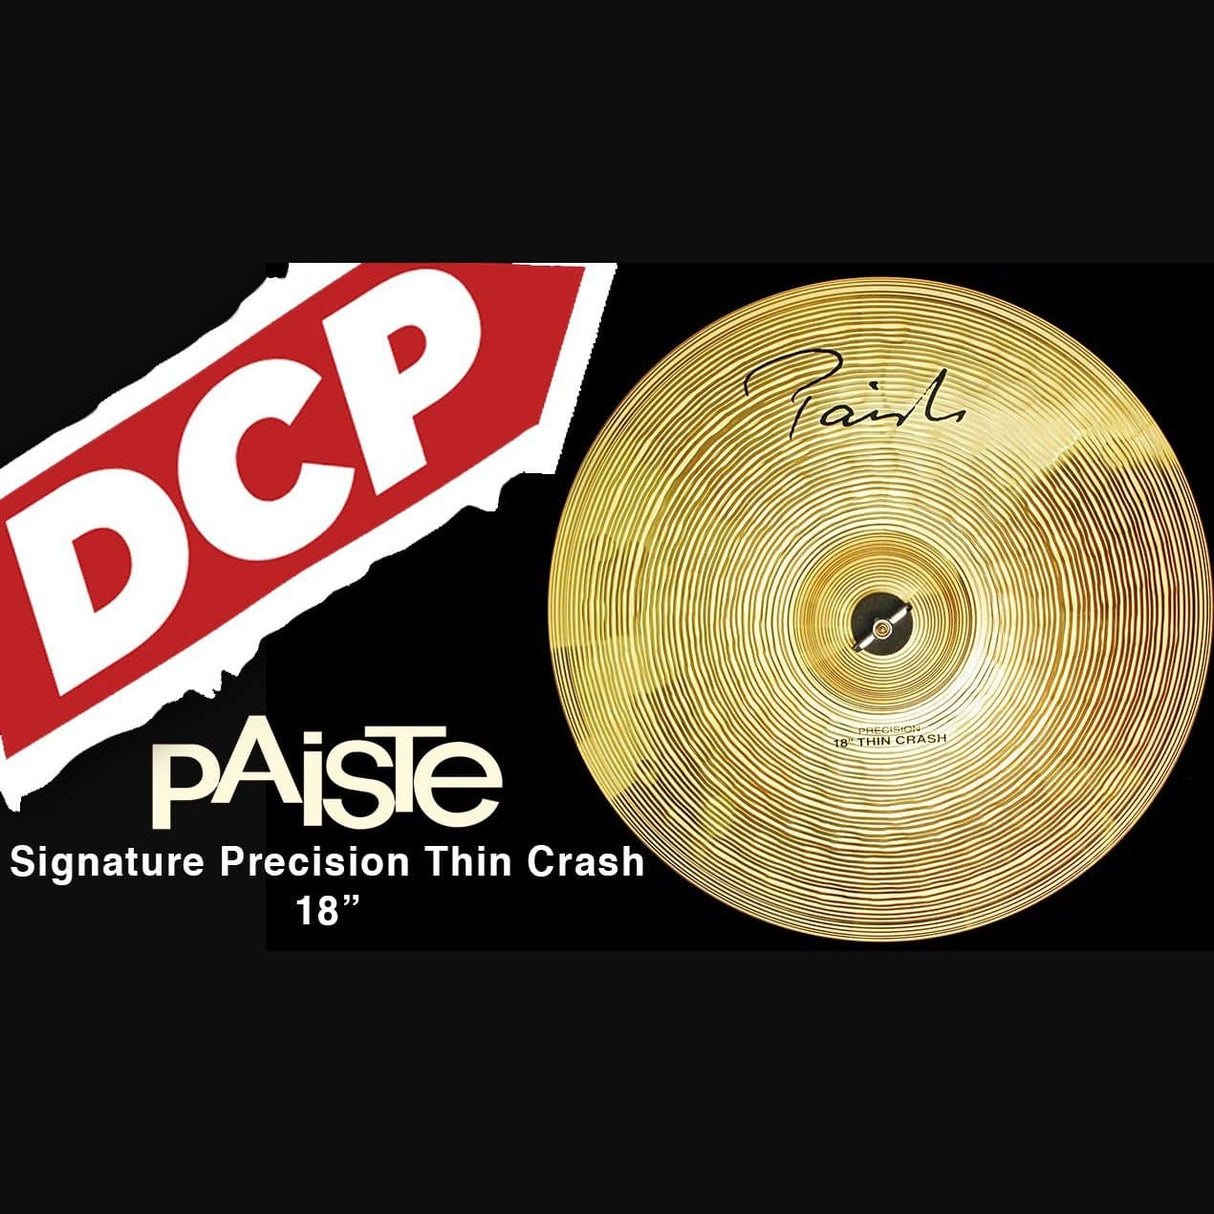 Paiste Signature Precision Thin Crash Cymbal 18"